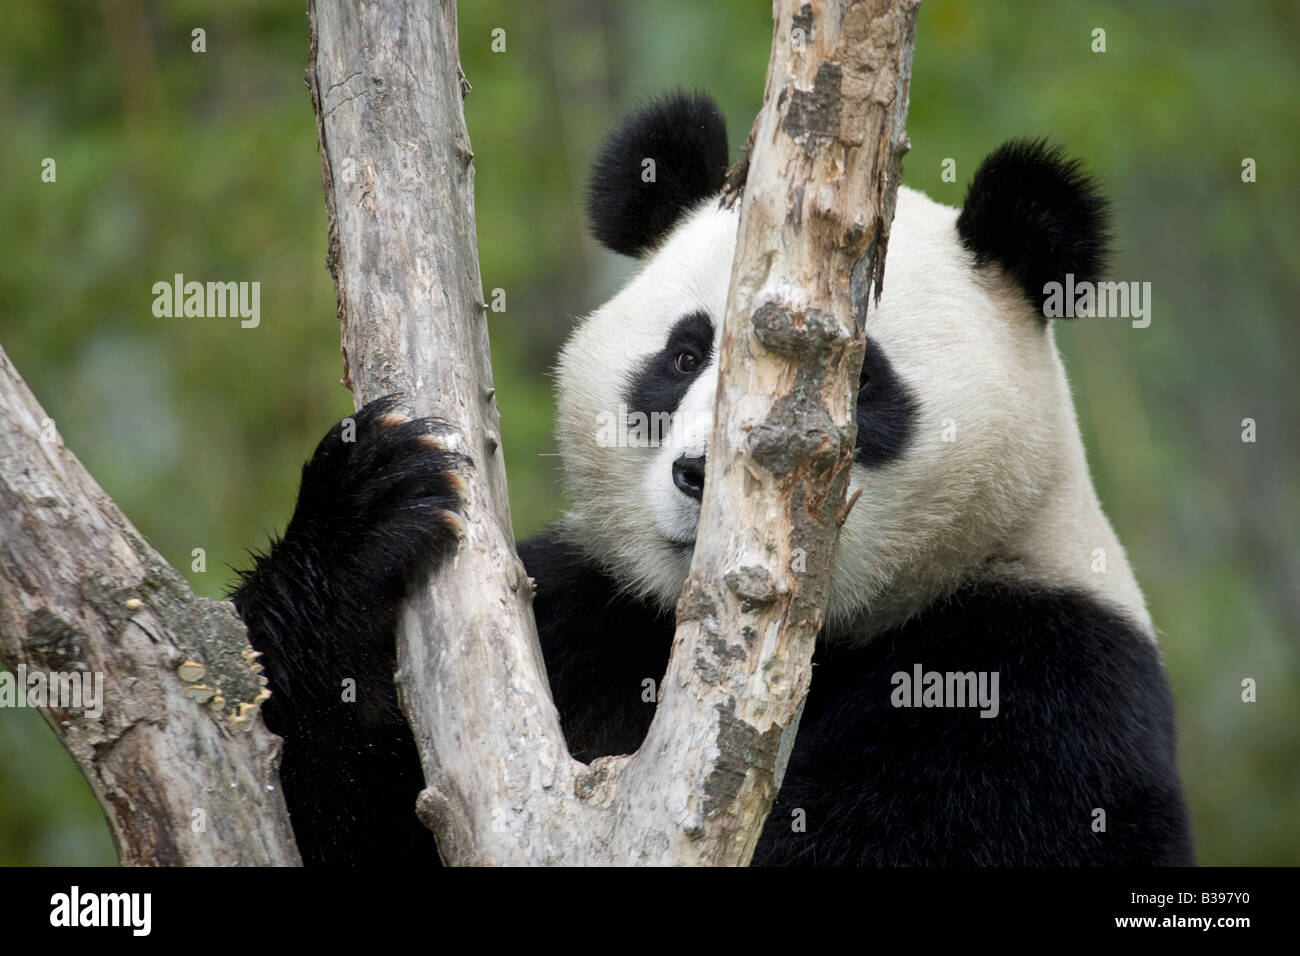 Giant Panda peering around a tree branch, Wolong, China Stock Photo